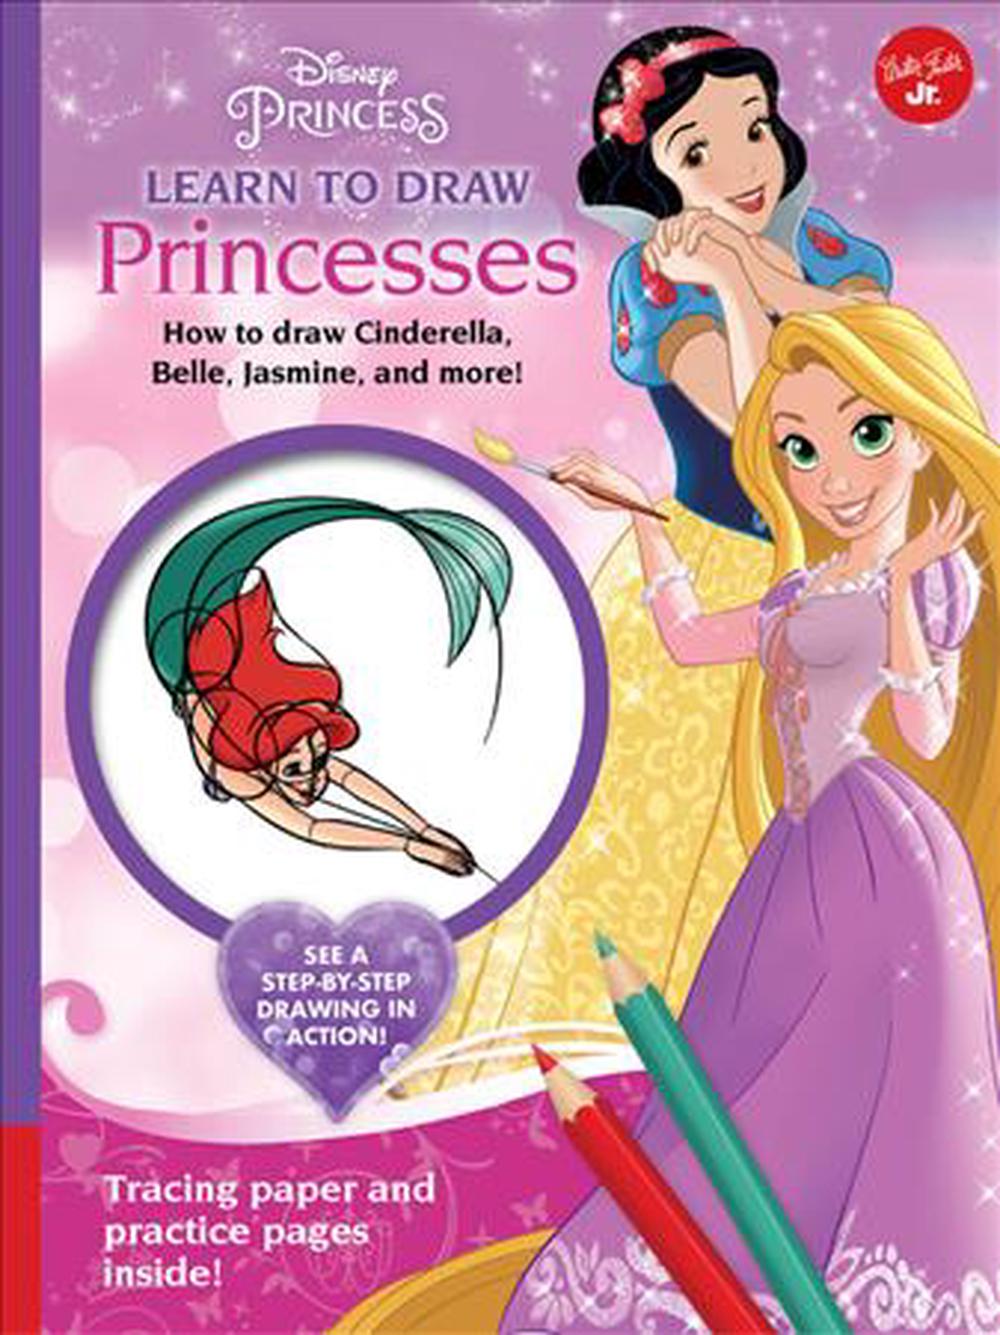 Disney Princess Learn to Draw Princesses How to Draw